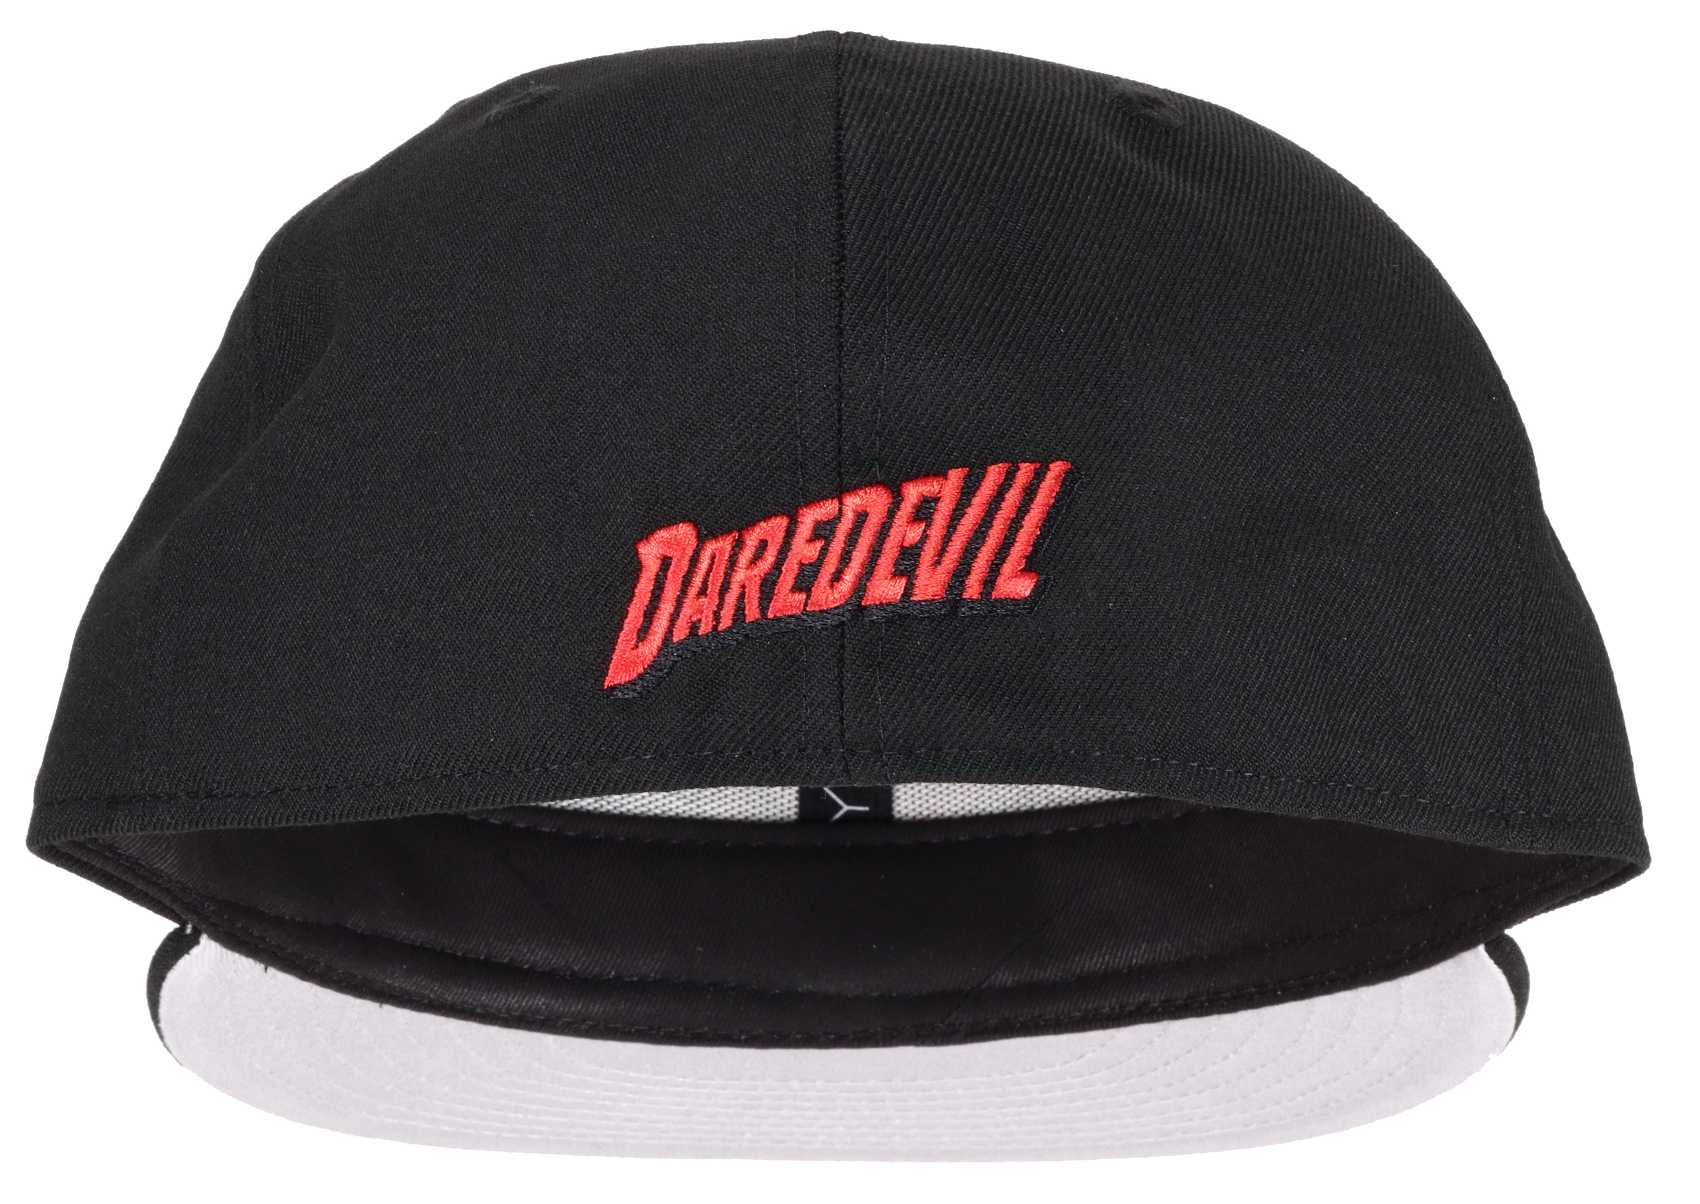 Daredevil Headshot Black 59Fifty Fitted Basecap New Era